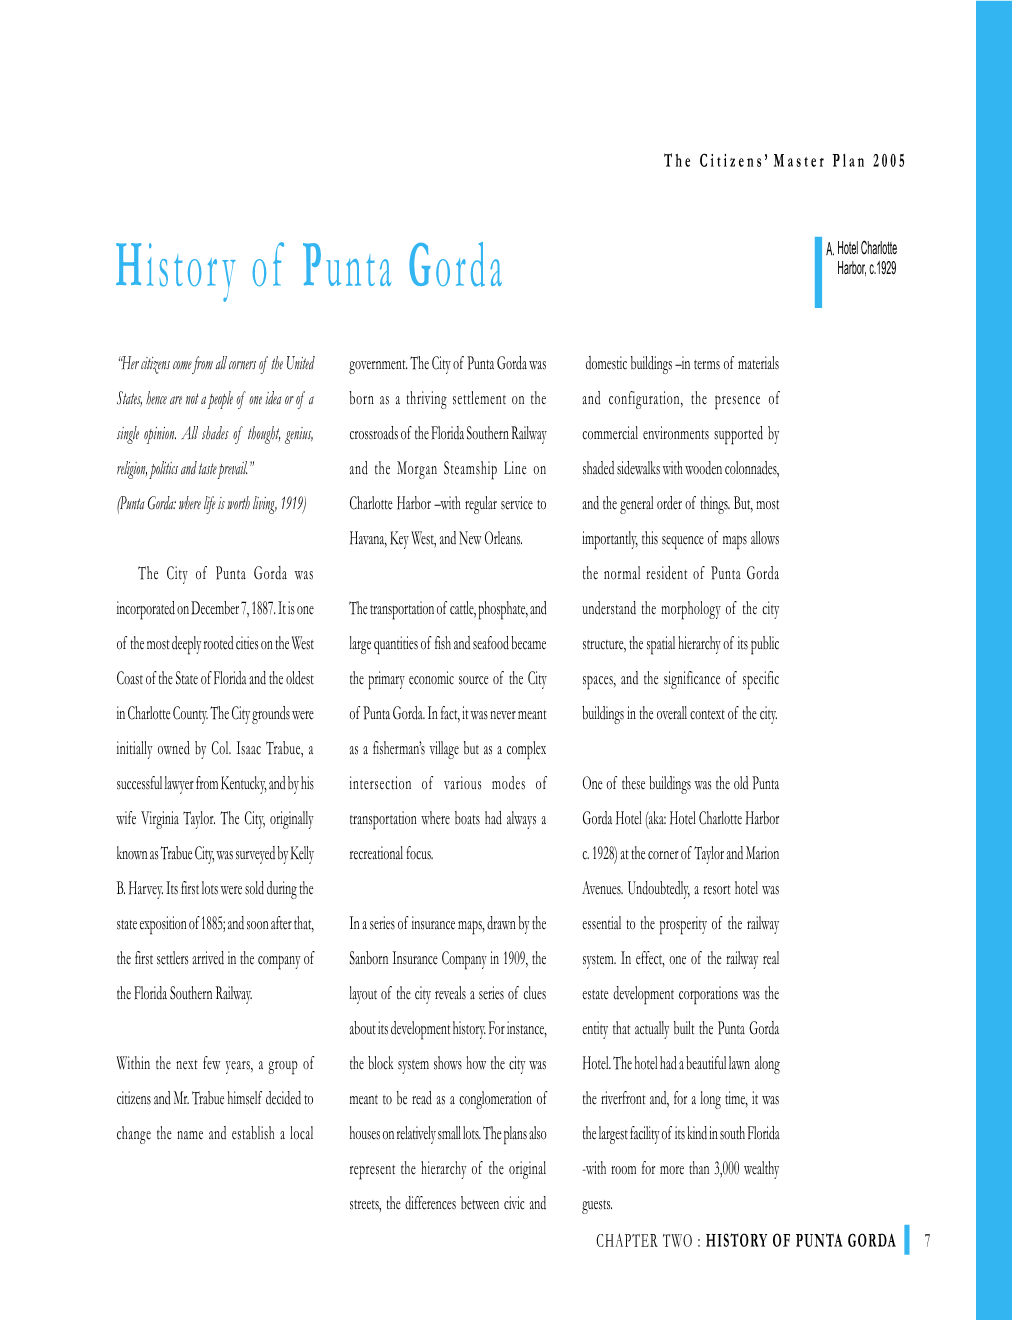 HISTORY of PUNTA GORDA 7 the Citizens’ Master Plan 2005